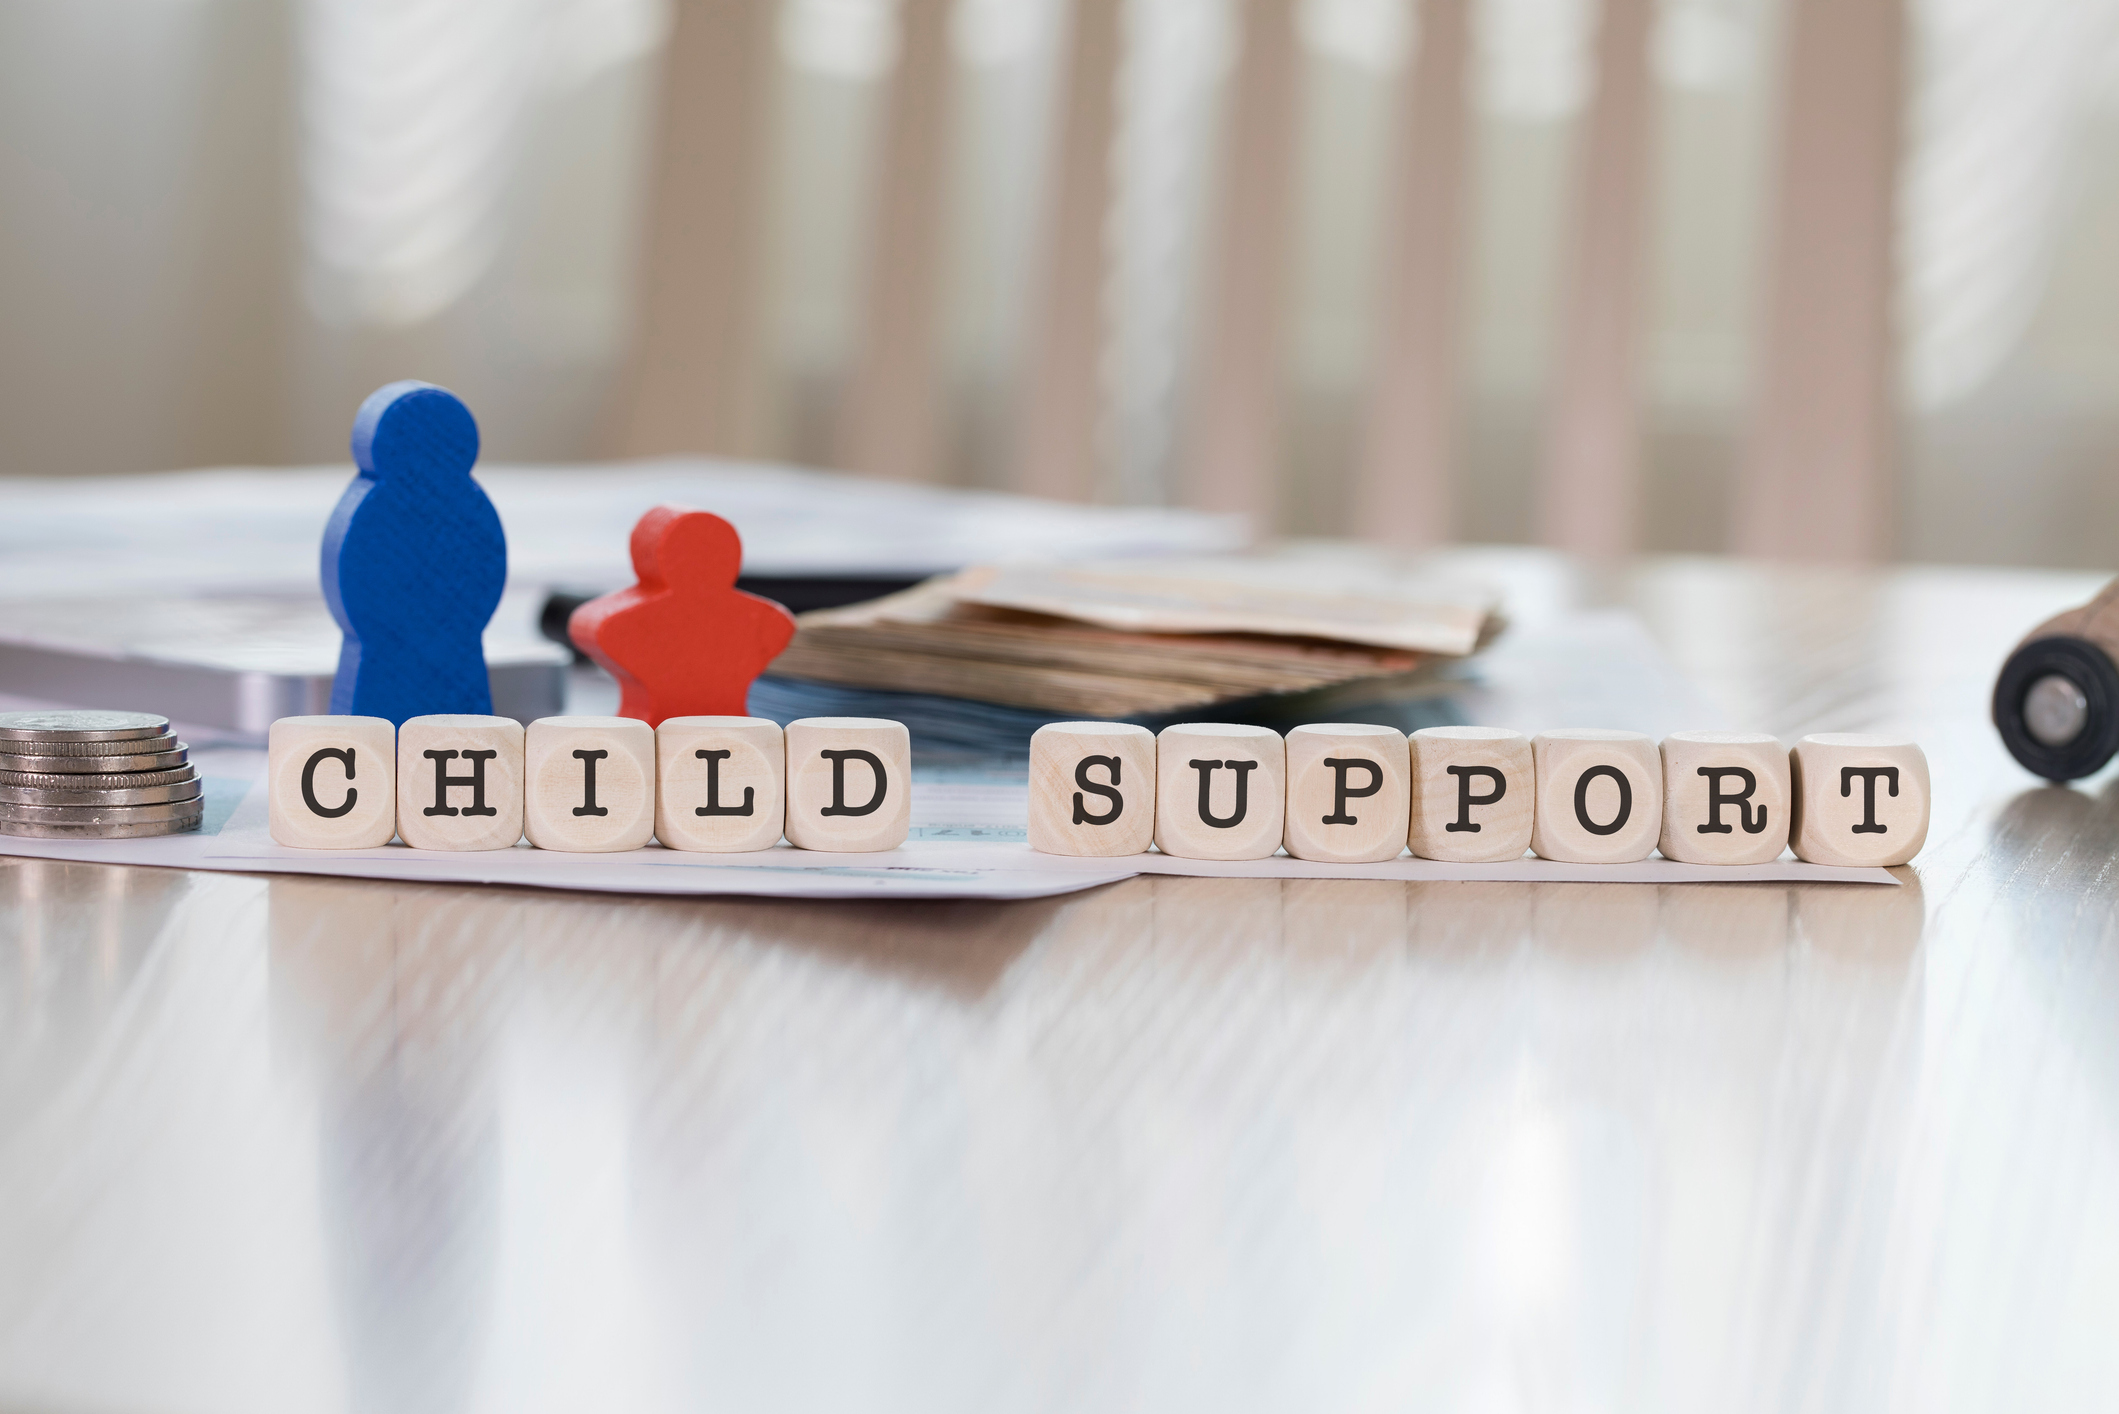 Child support divorce mediation income